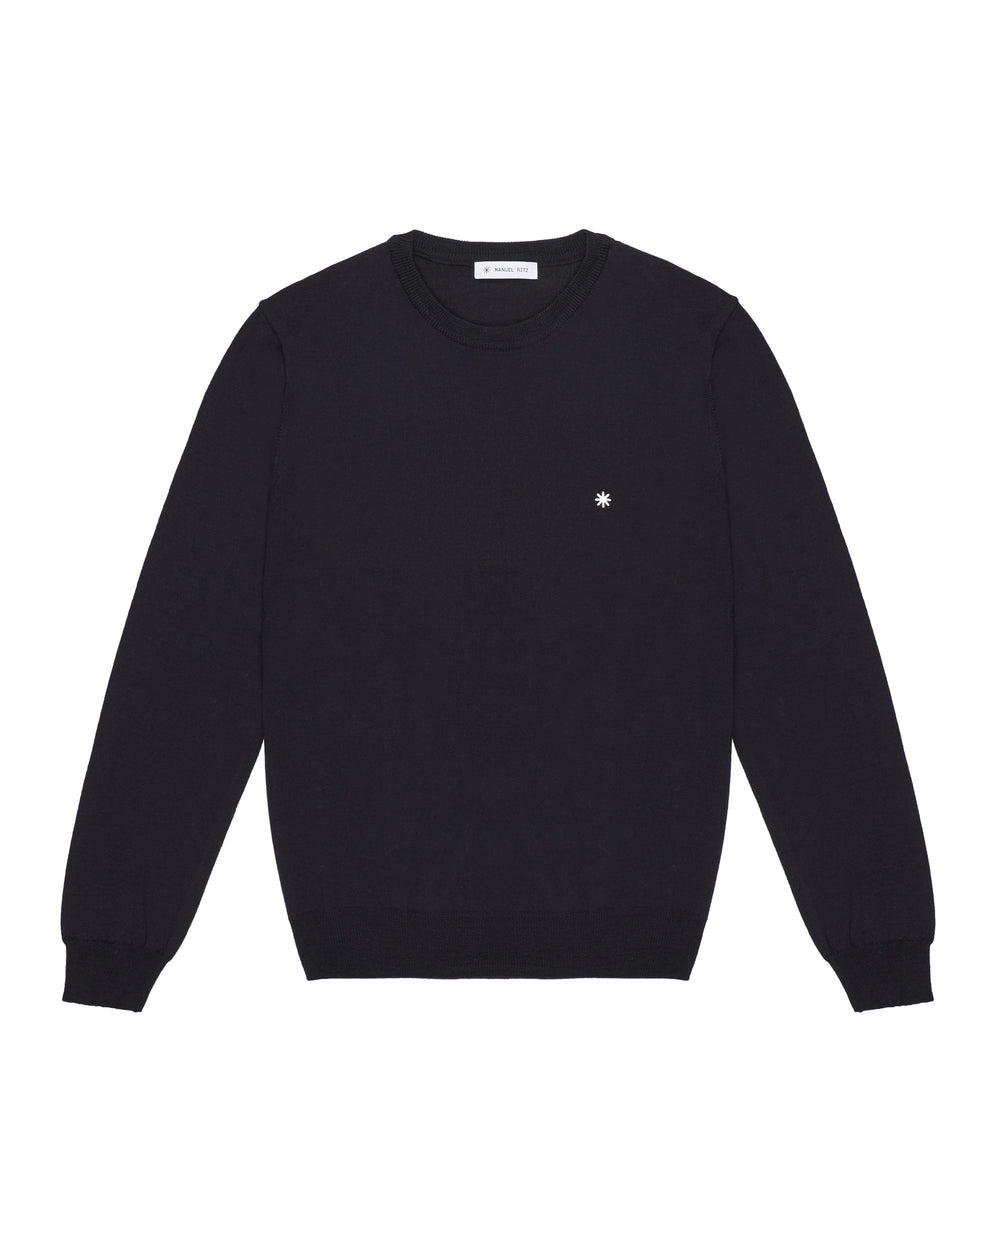 black slim crewneck sweater pure wool